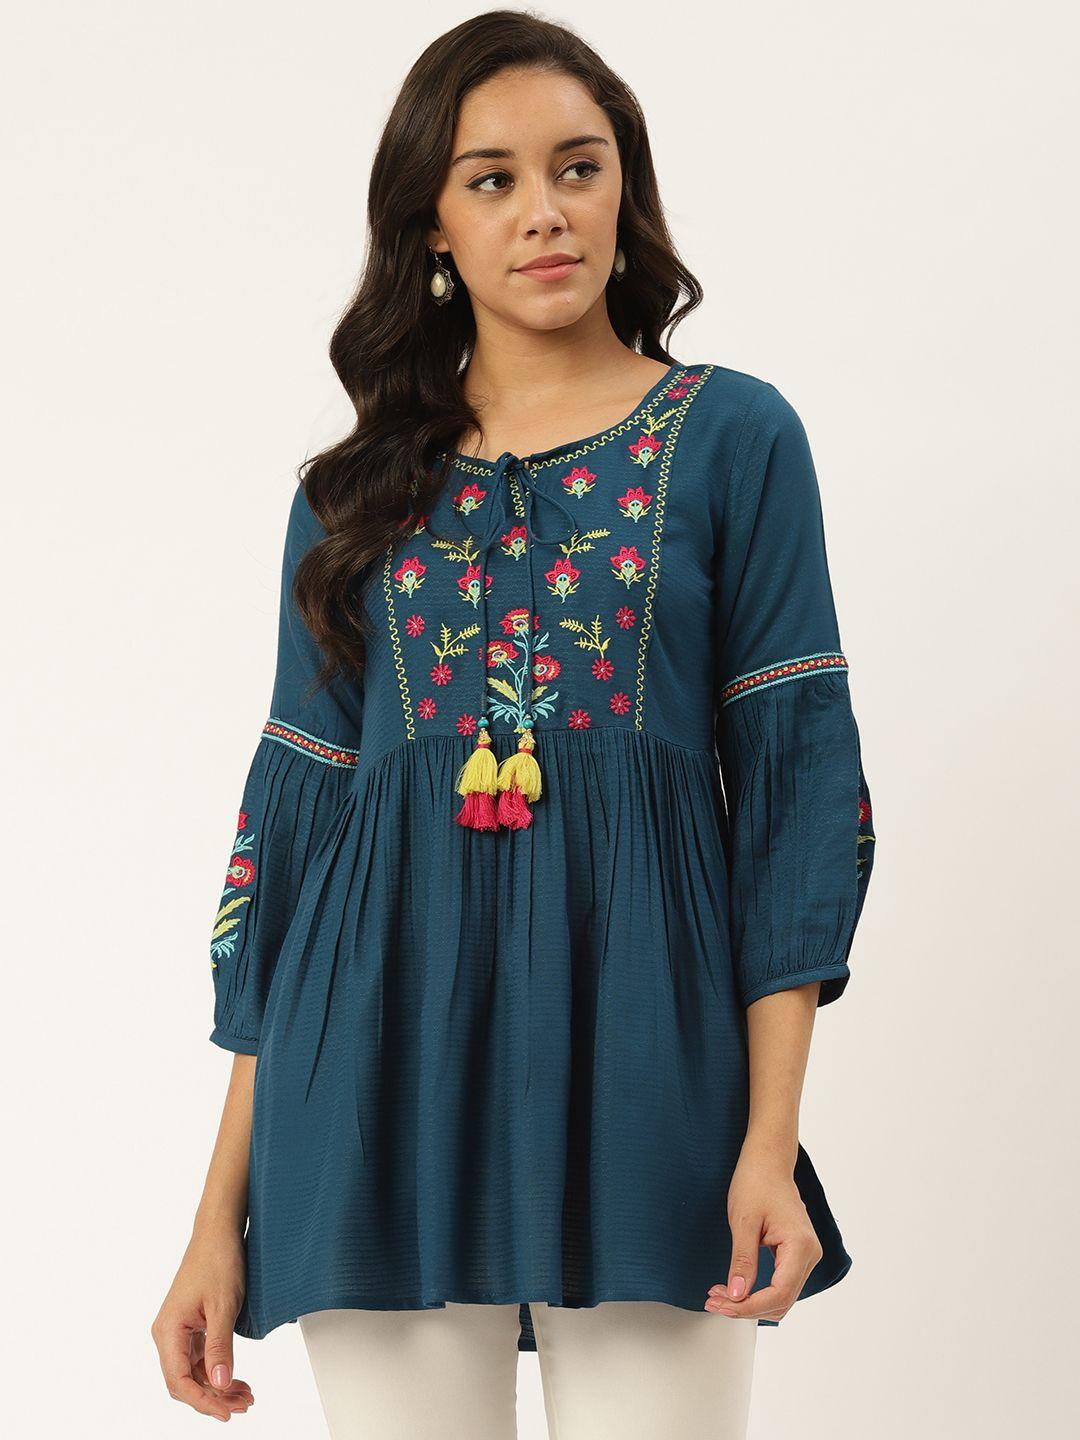 rangmayee-women-teal-blue-self-design-a-line-tunic